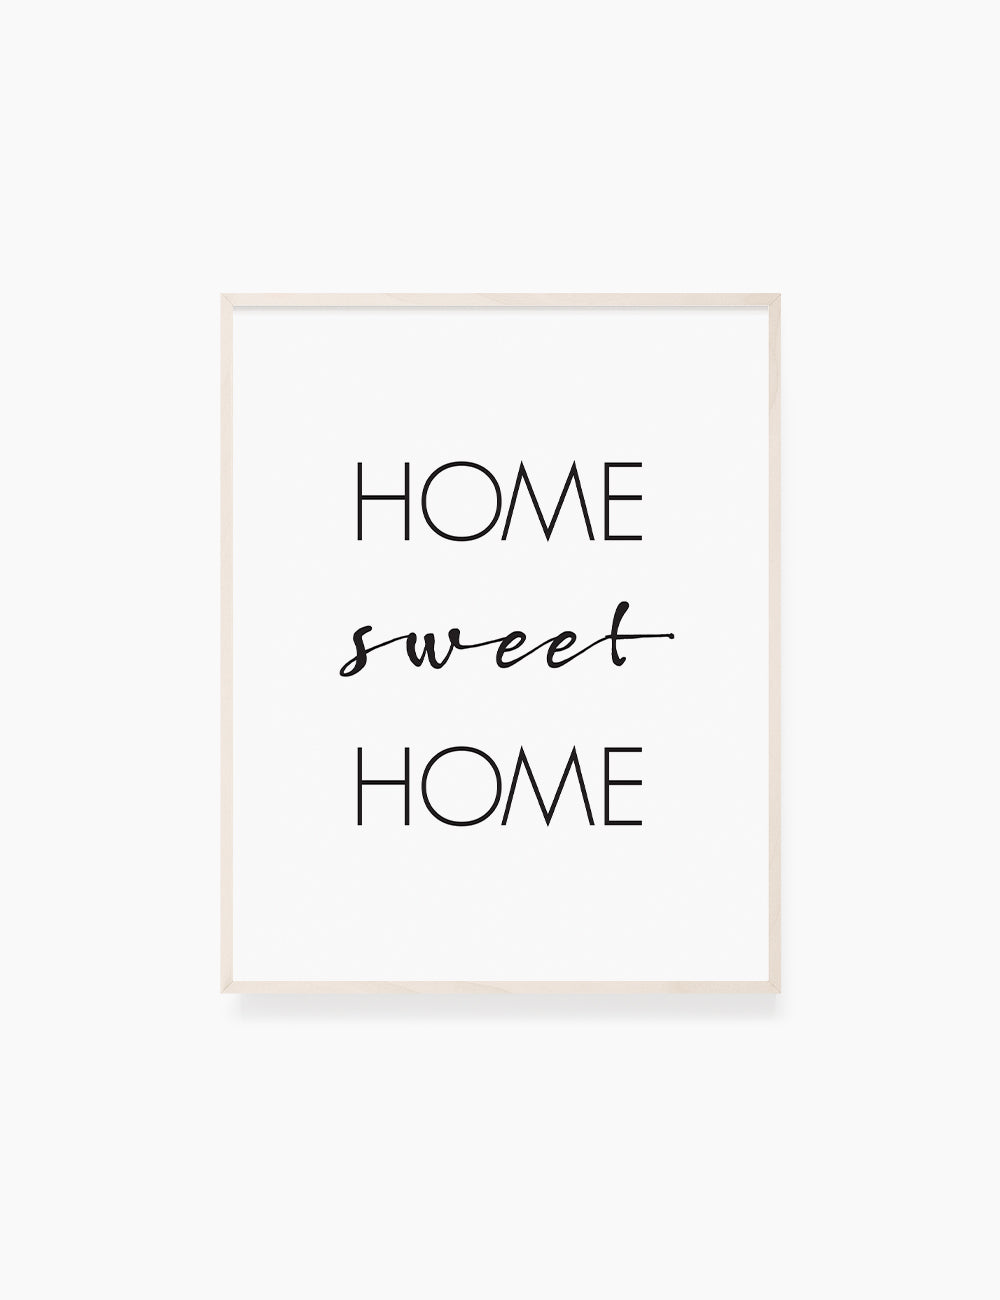 Printable Wall Art Quote: HOME SWEET HOME Printable Poster. WA005 - Paper Moon Art & Design